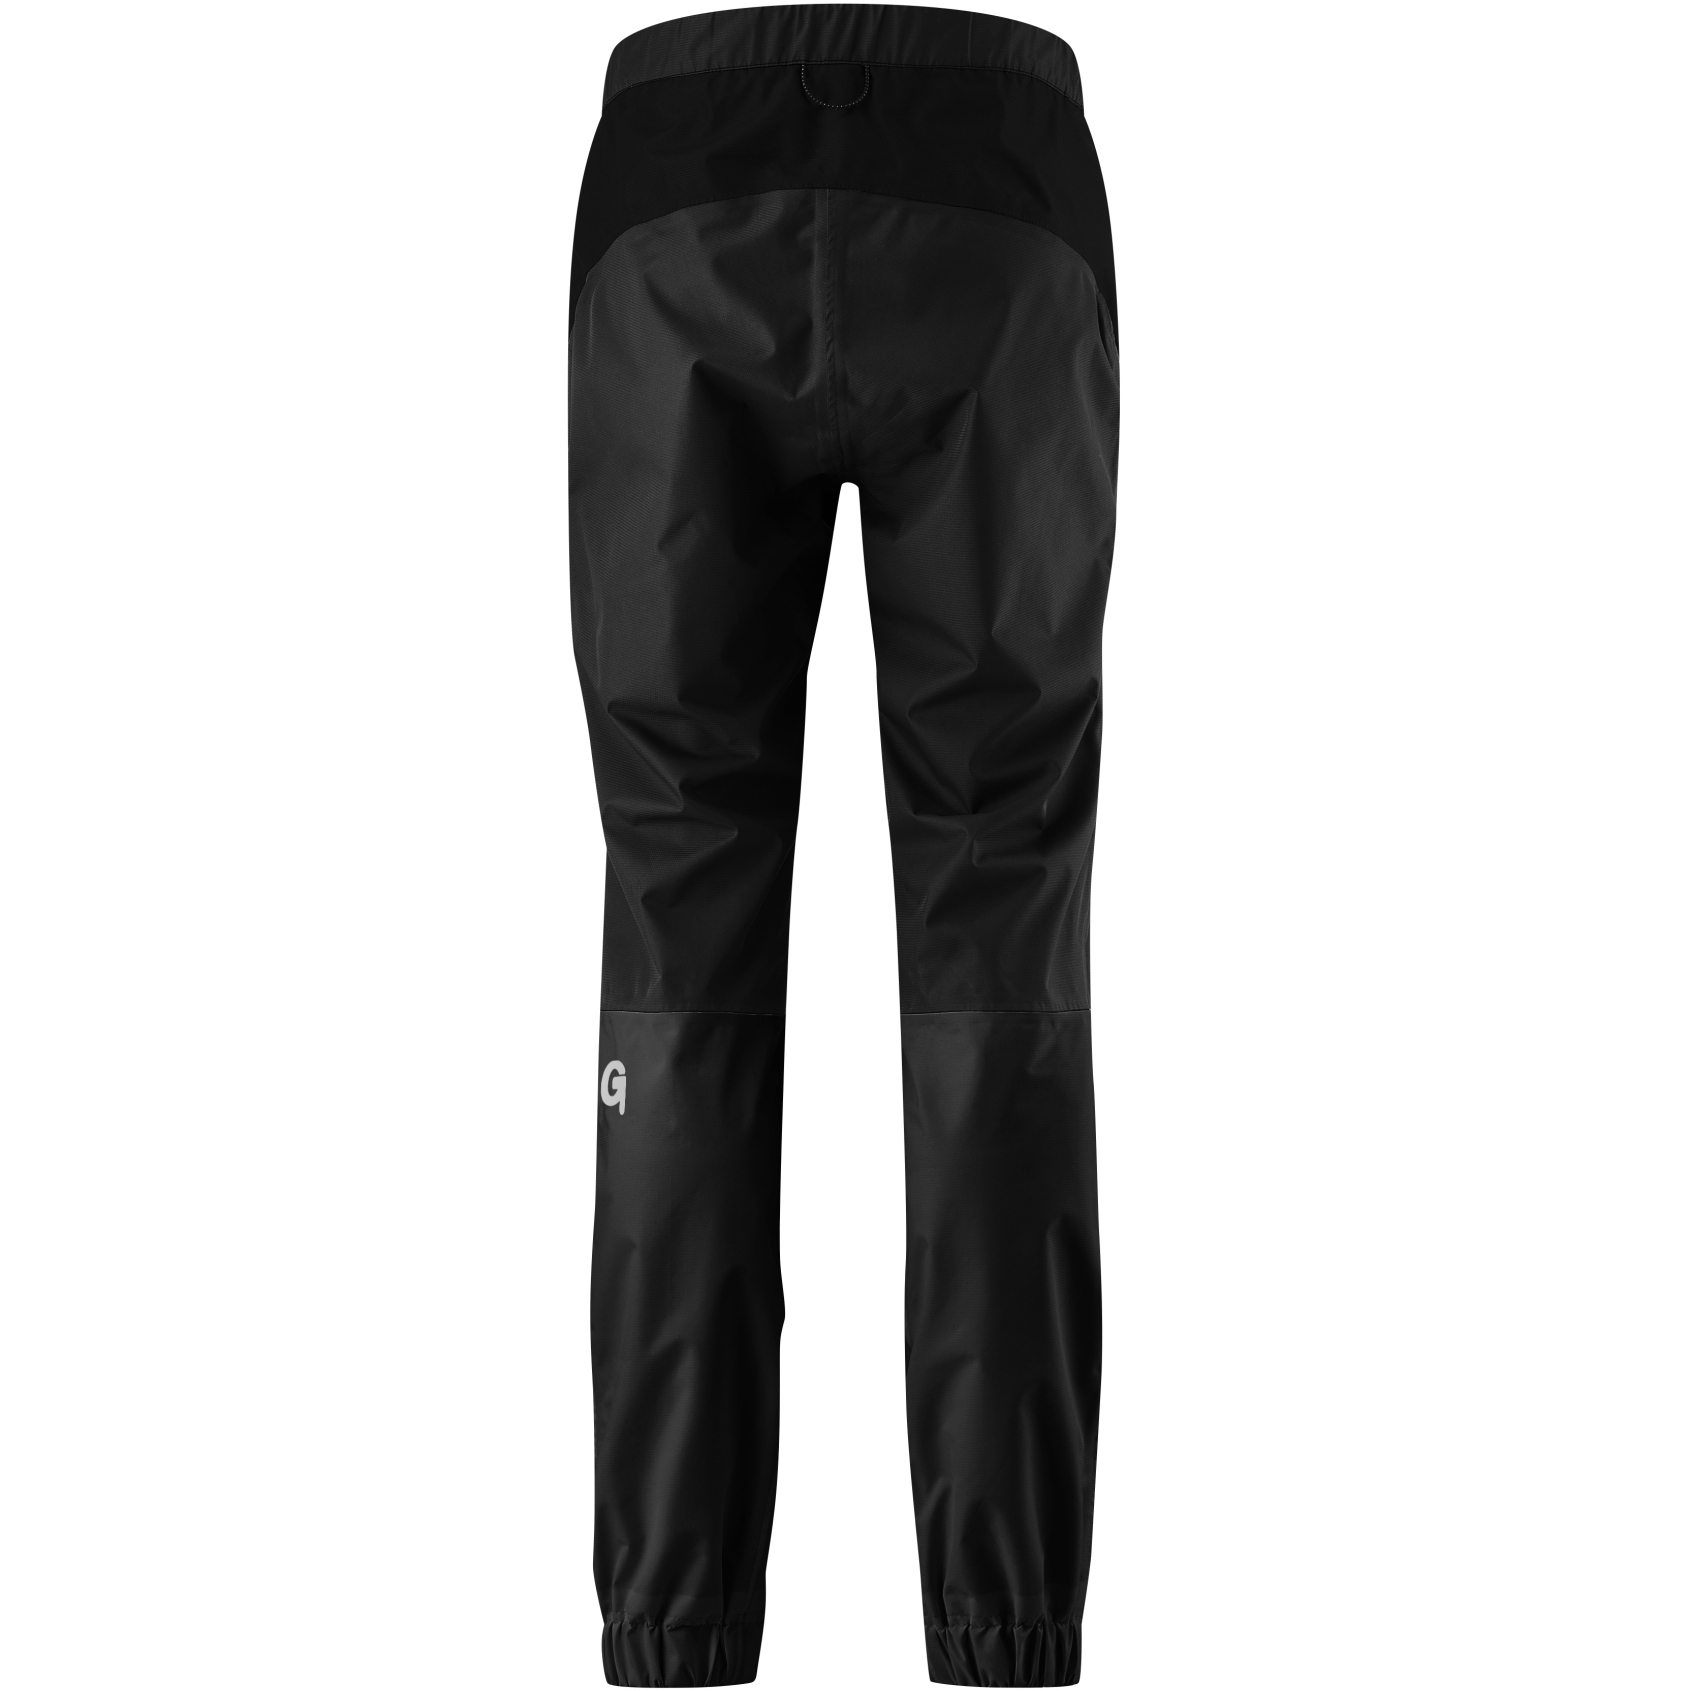 【Auffüllen】 Gonso Sevo Therm Unisex - | All-Weather Pants Black BIKE24 Bike